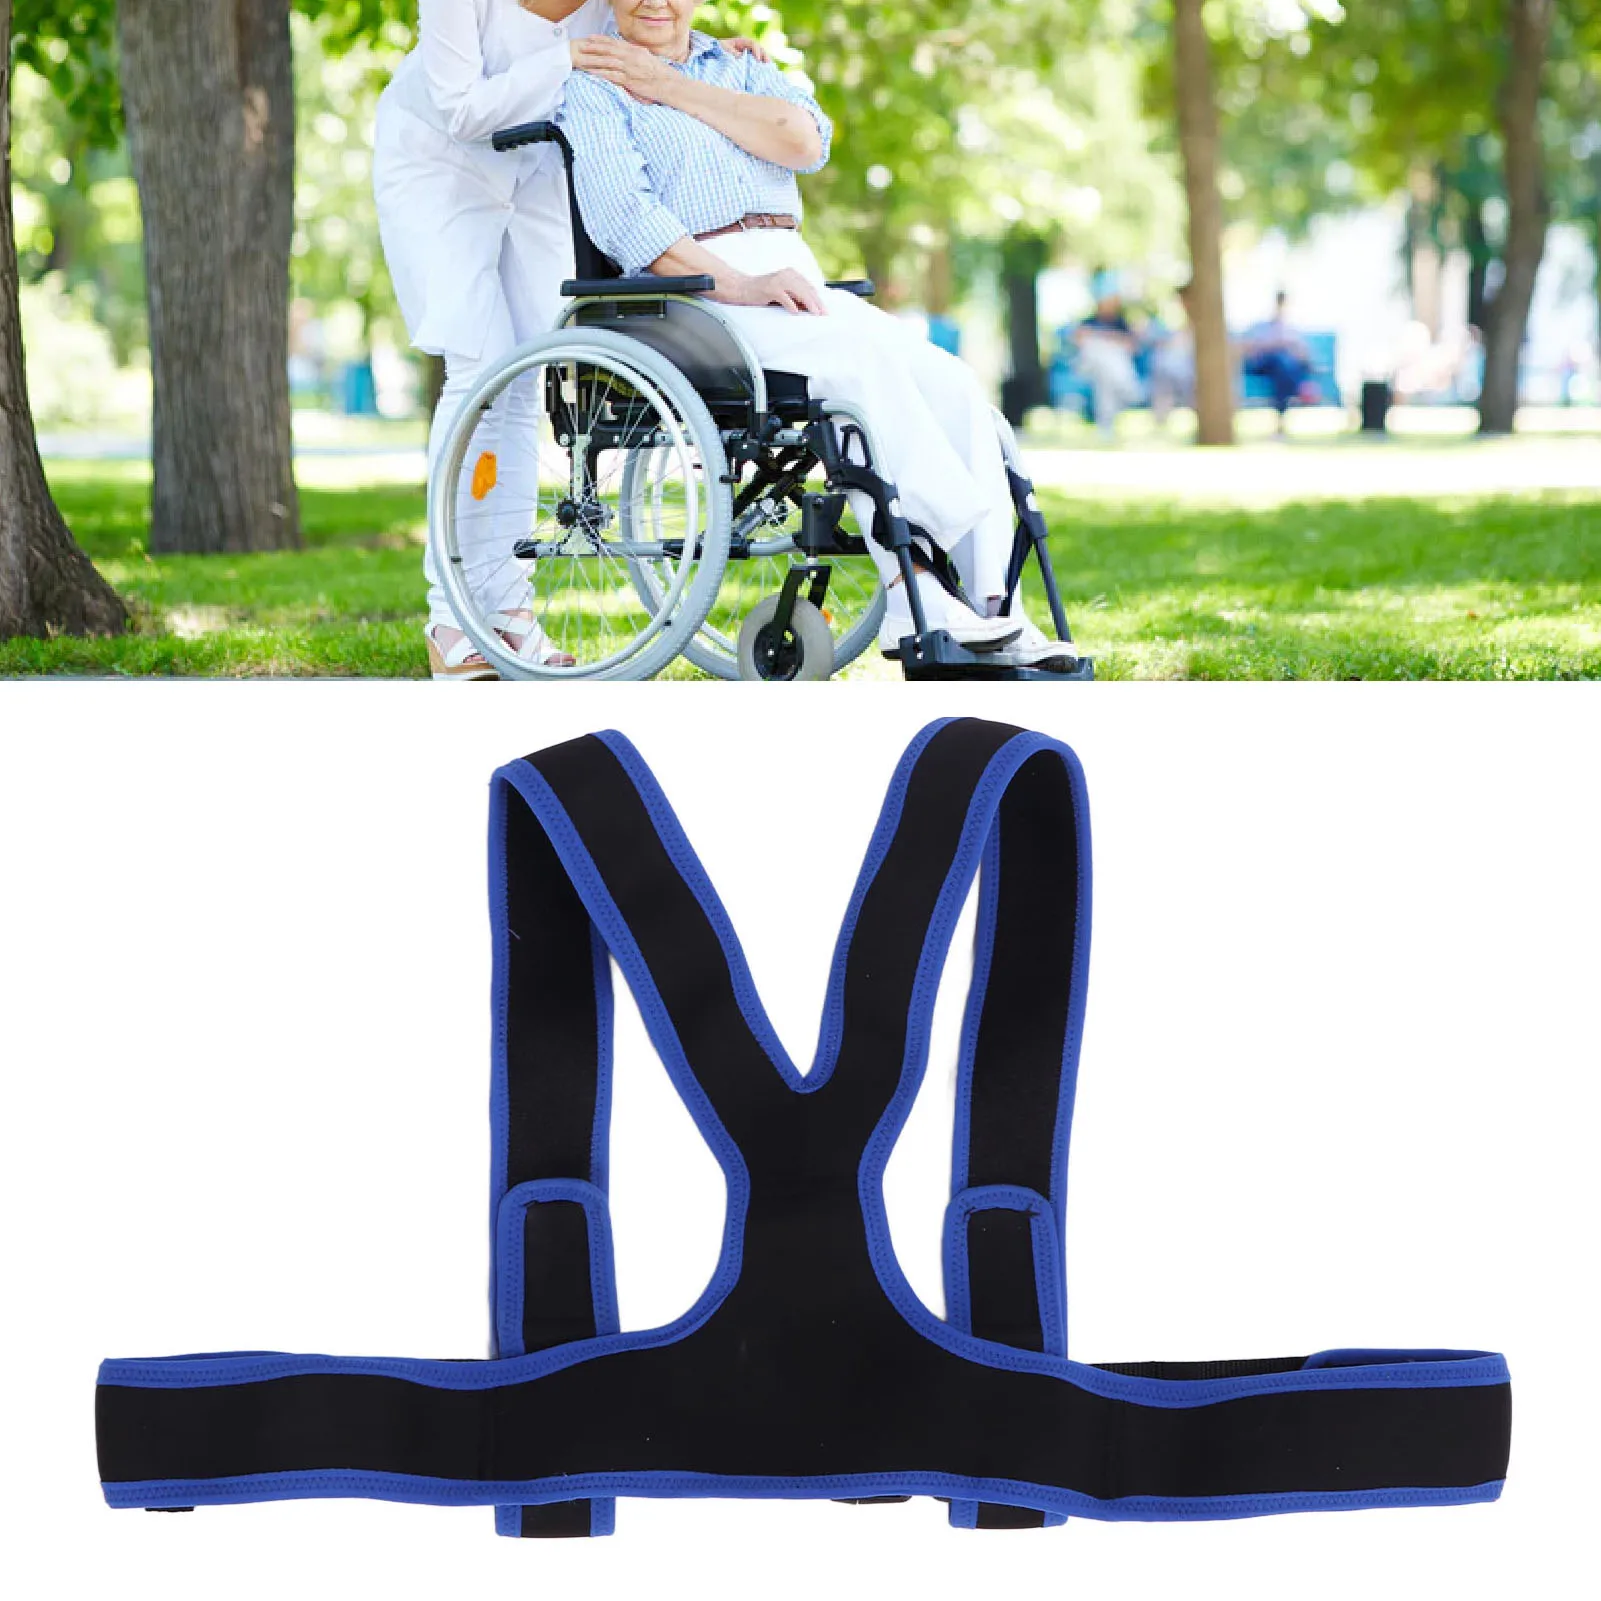 

Wheelchair Belt Torso Support Belt for Patient Elderly Disabled Adjustable Prevent Falling Safety Harness